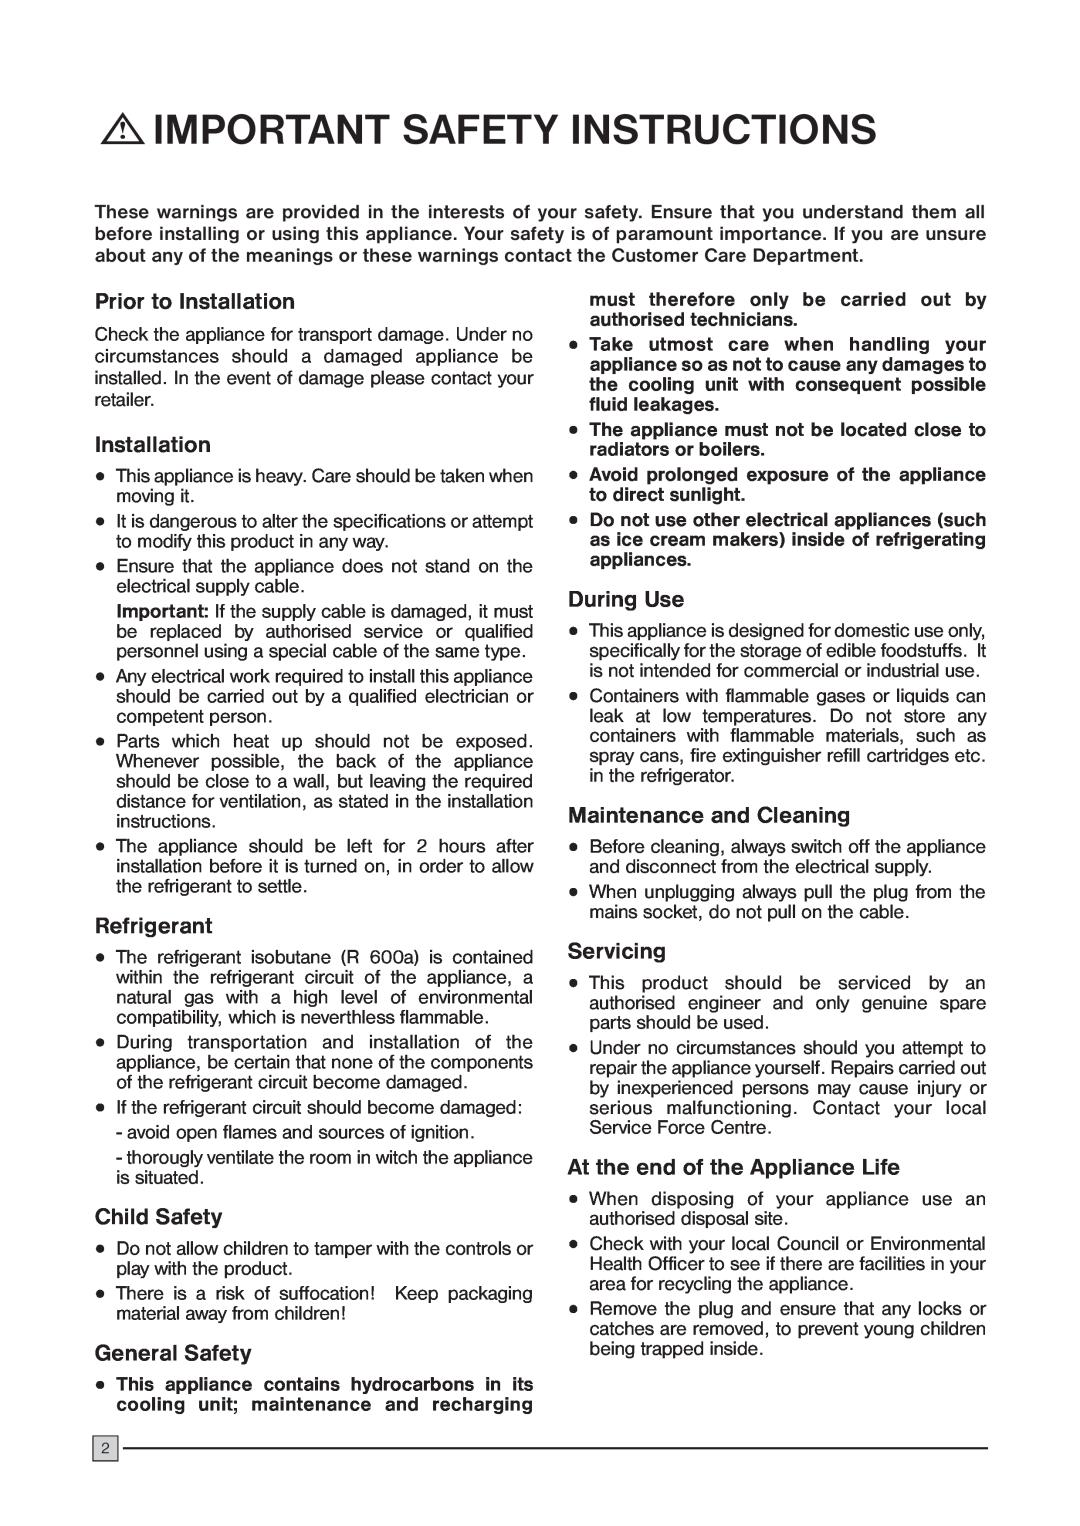 Zanussi ZCF 52 C Important Safety Instructions, Prior to Installation, Refrigerant, Child Safety, General Safety 